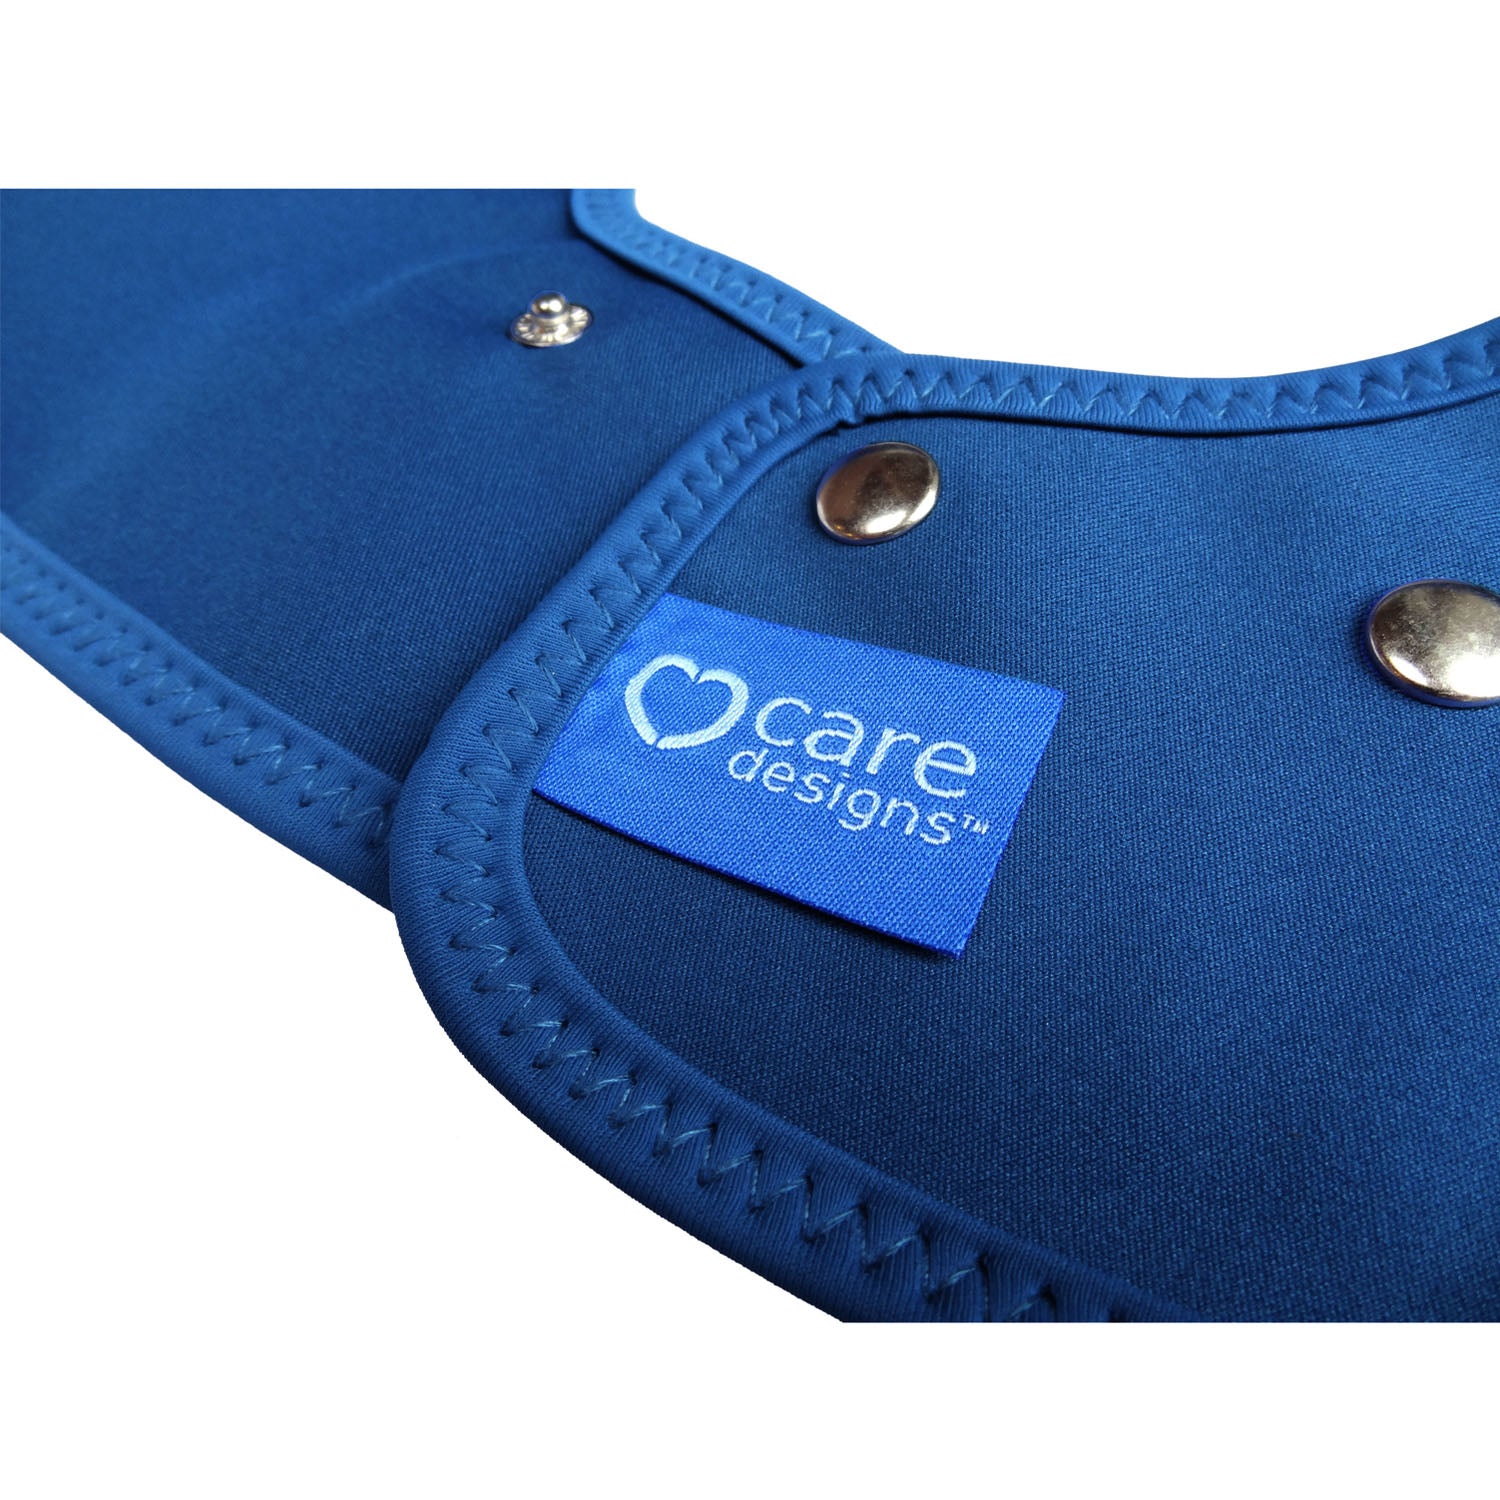 Tabard style adult bib - Large Blue | Health Care | Care Designs